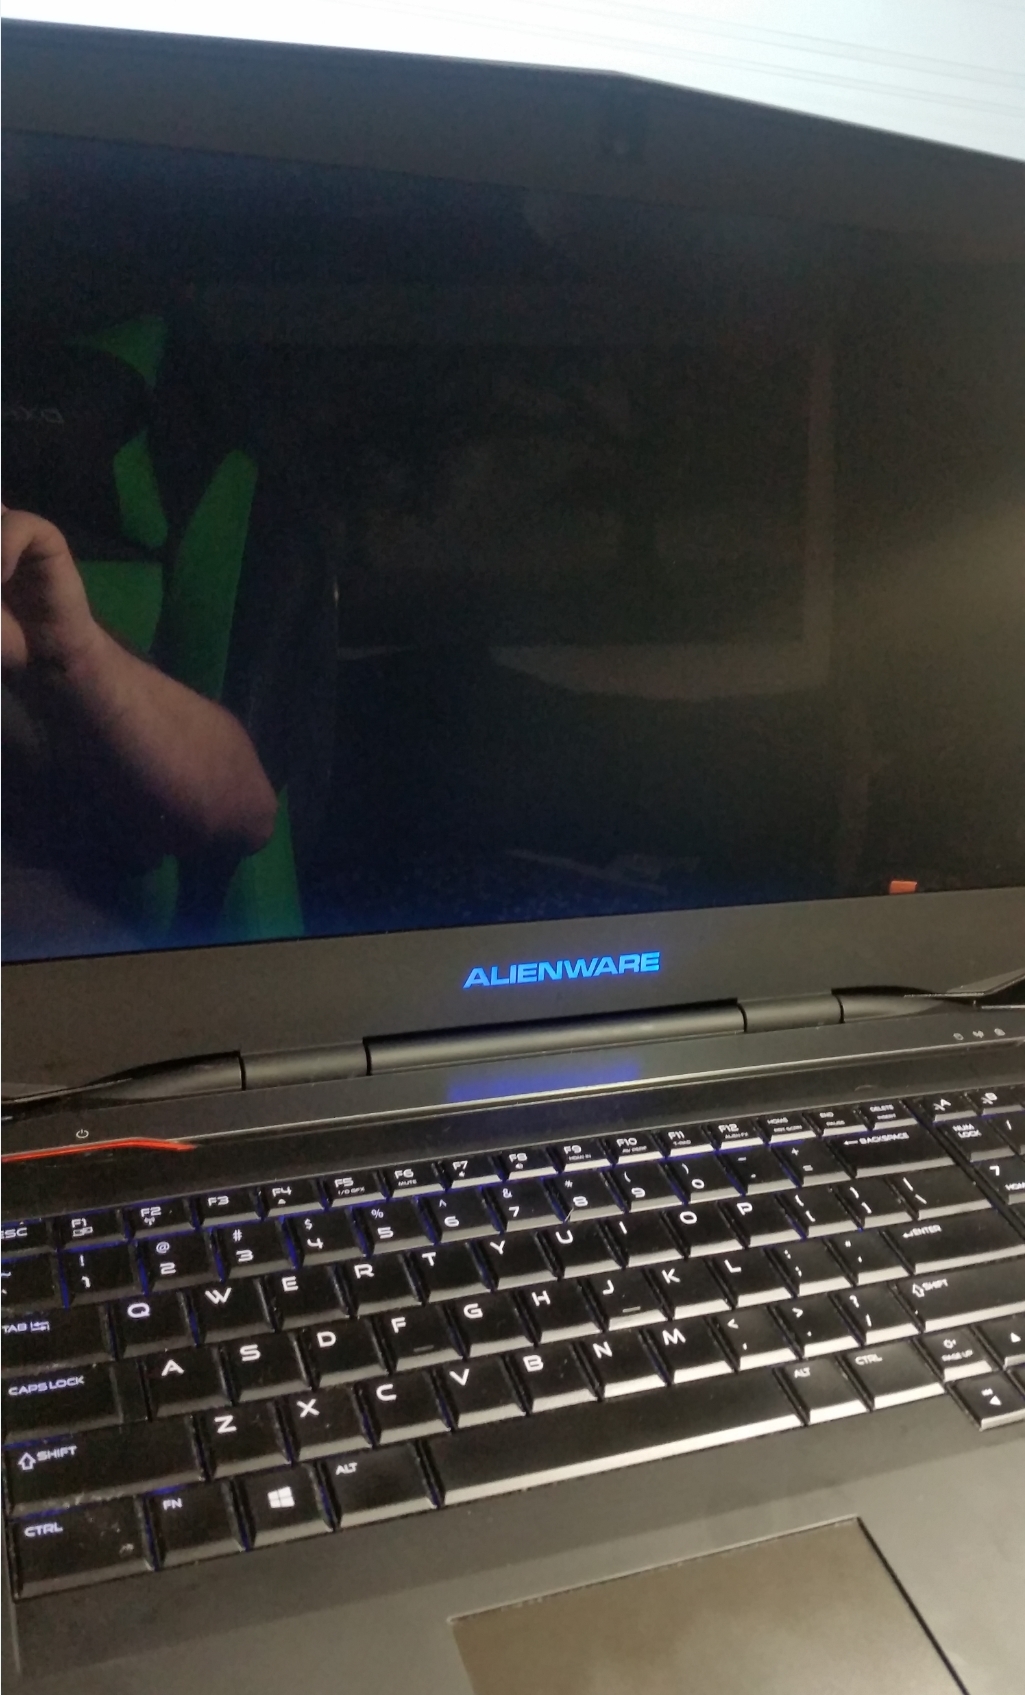 Alienware M17x Windows 10